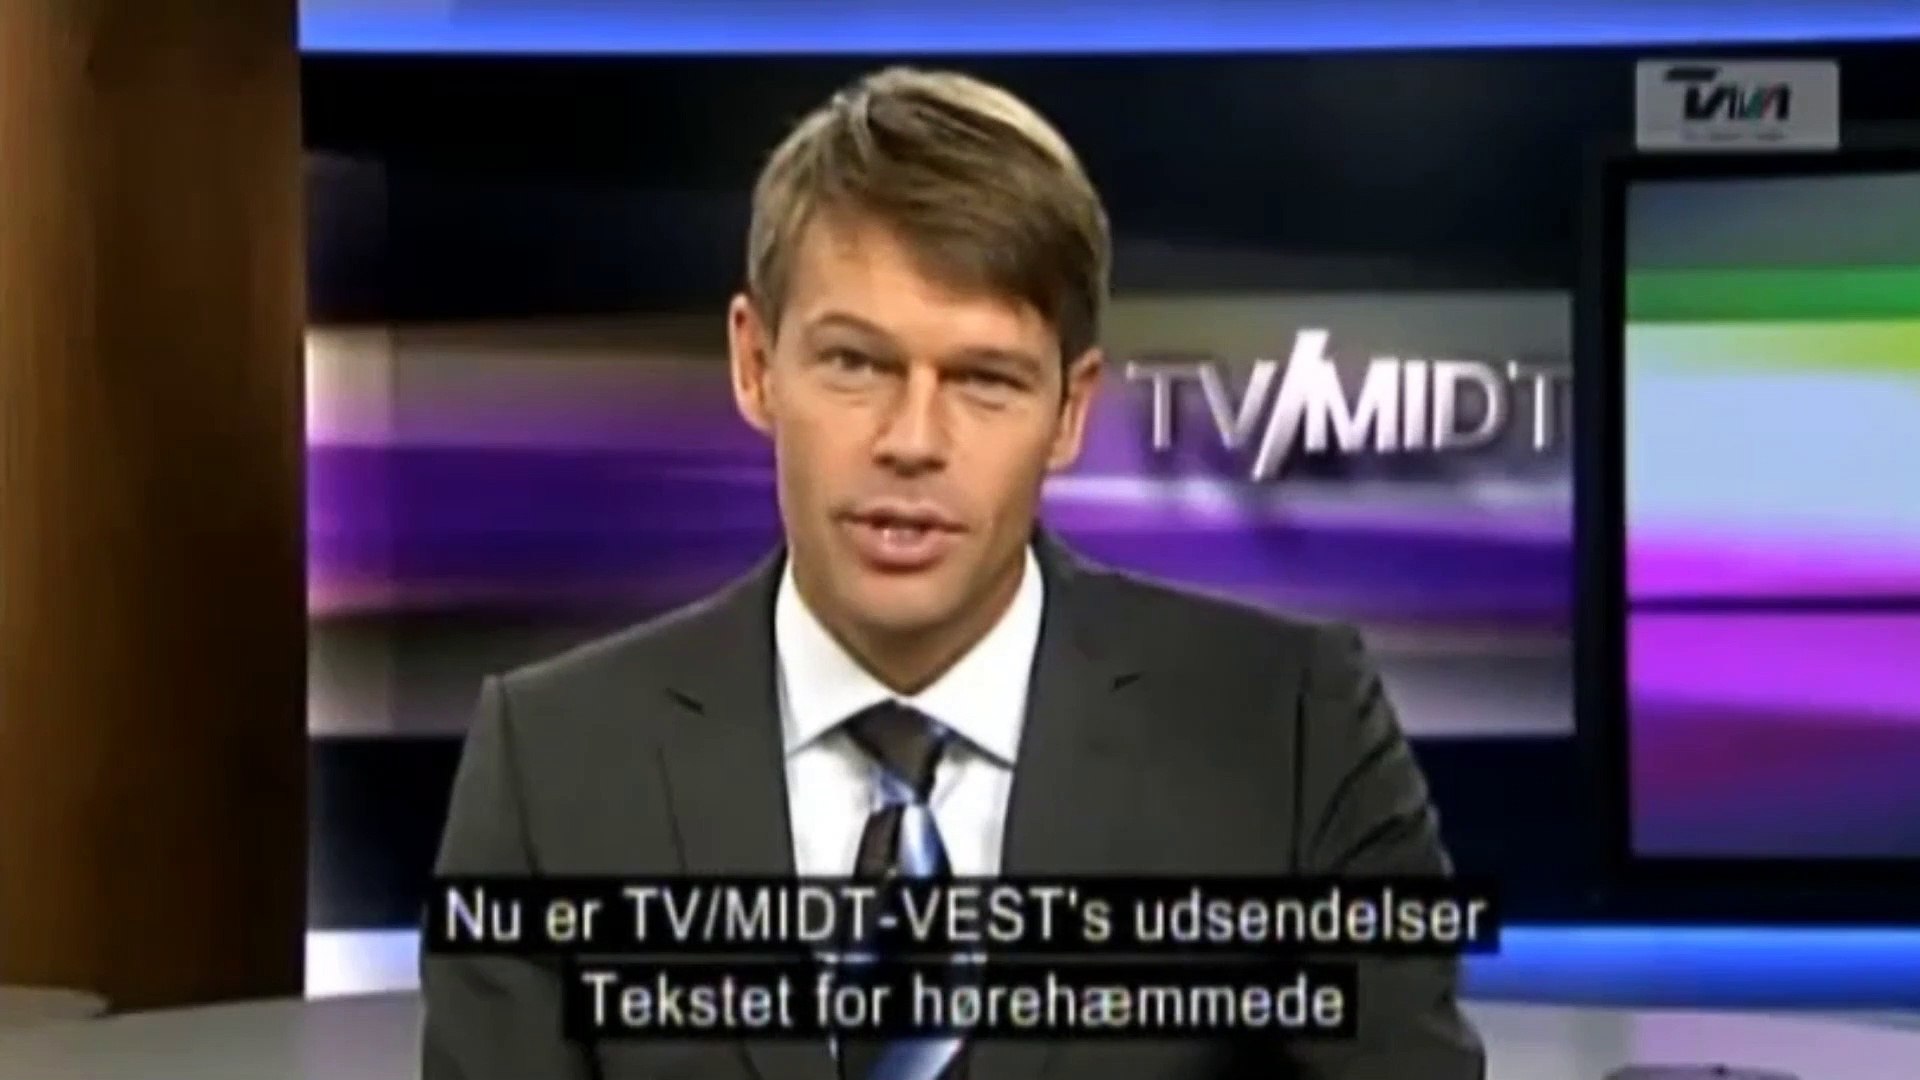 Livetekstning på TV/MIDT-VEST | 2011 | TV MIDTVEST - TV2 Danmark - video  Dailymotion